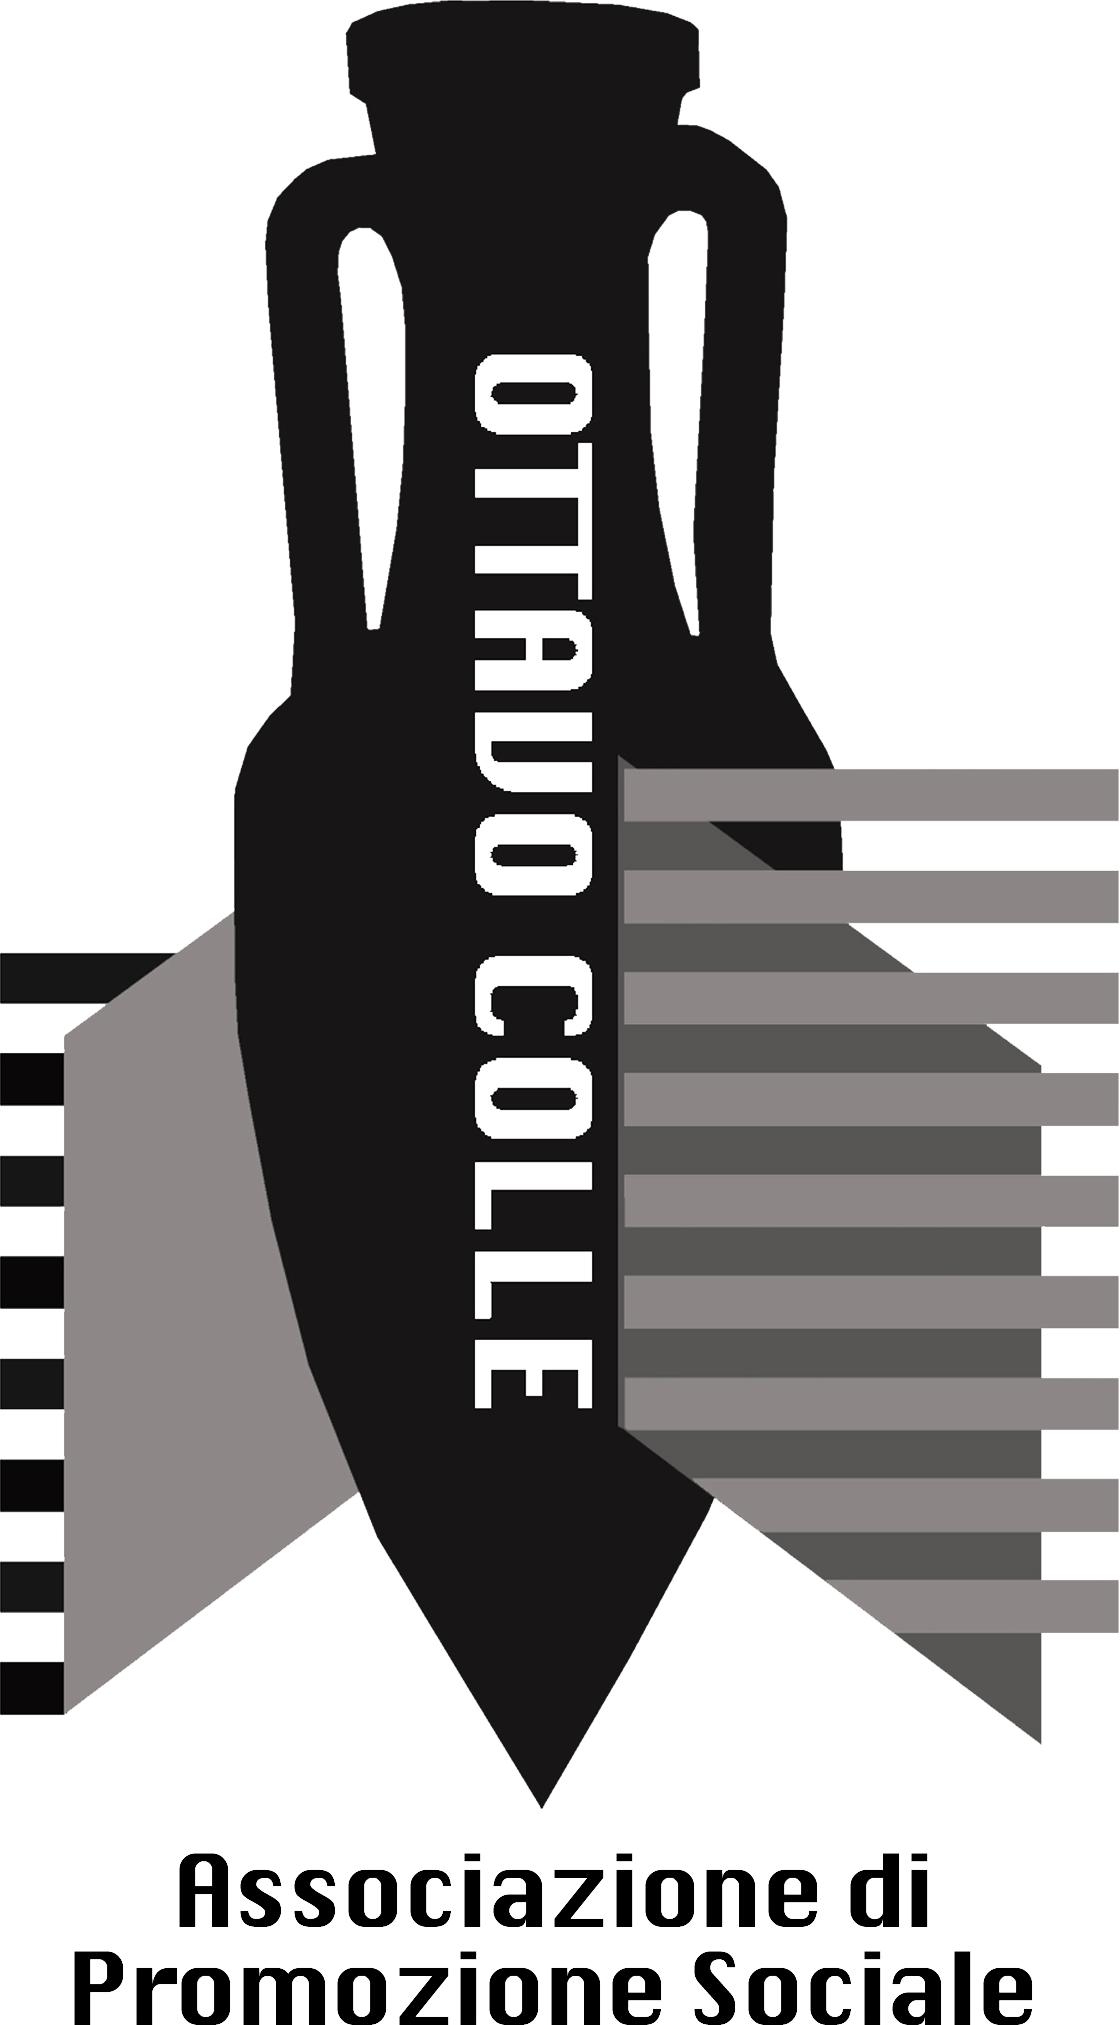 Ottavo Colle logo